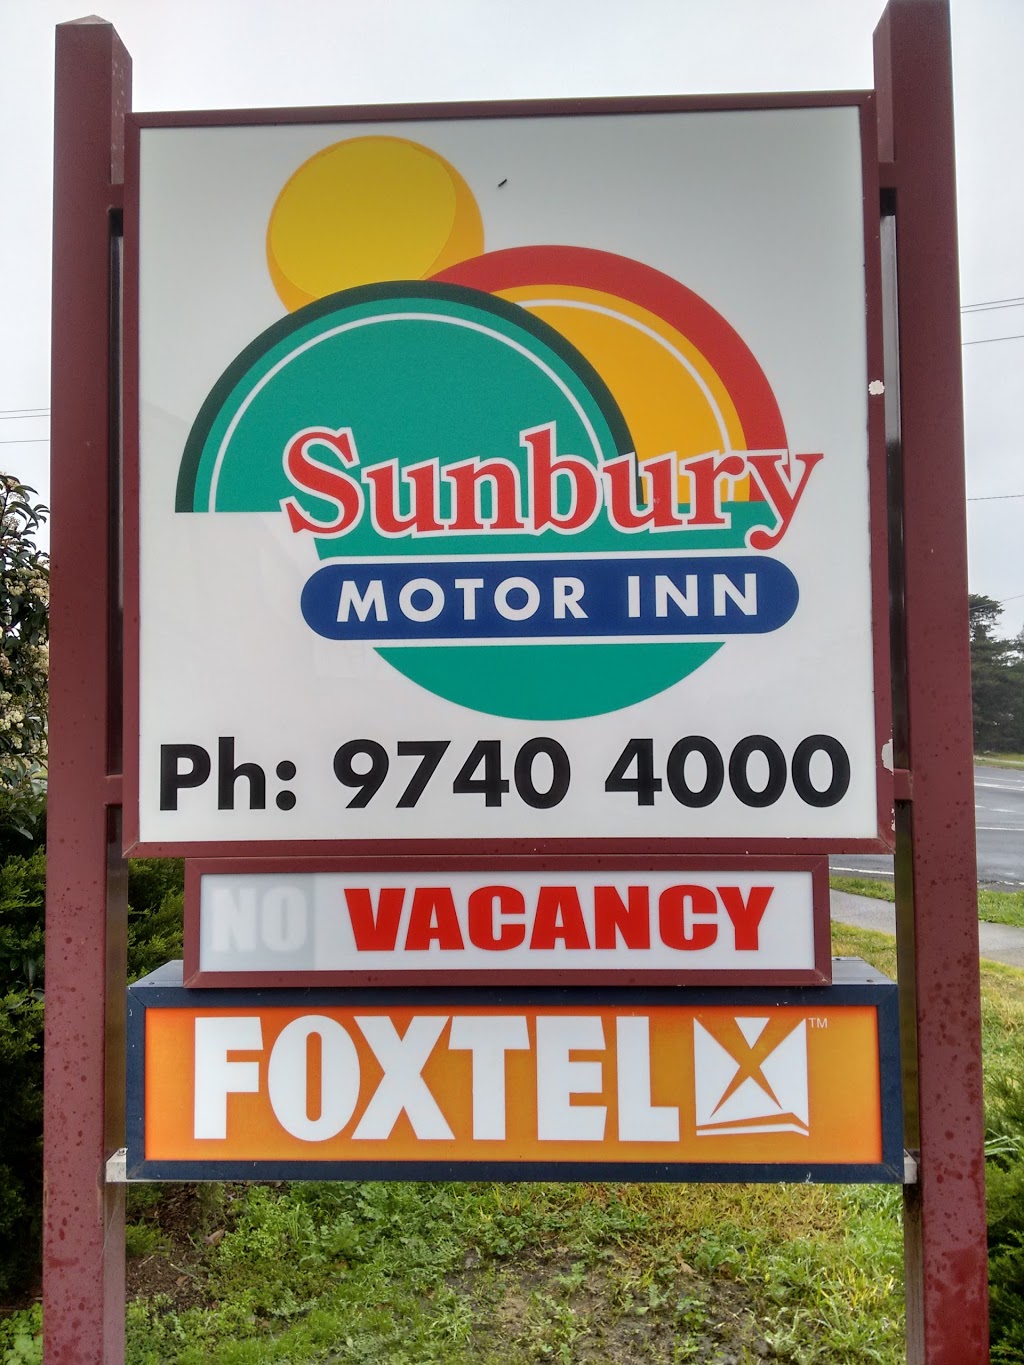 Sunbury Motor Inn | lodging | 52 Ligar St, Sunbury VIC 3429, Australia | 0397404000 OR +61 3 9740 4000